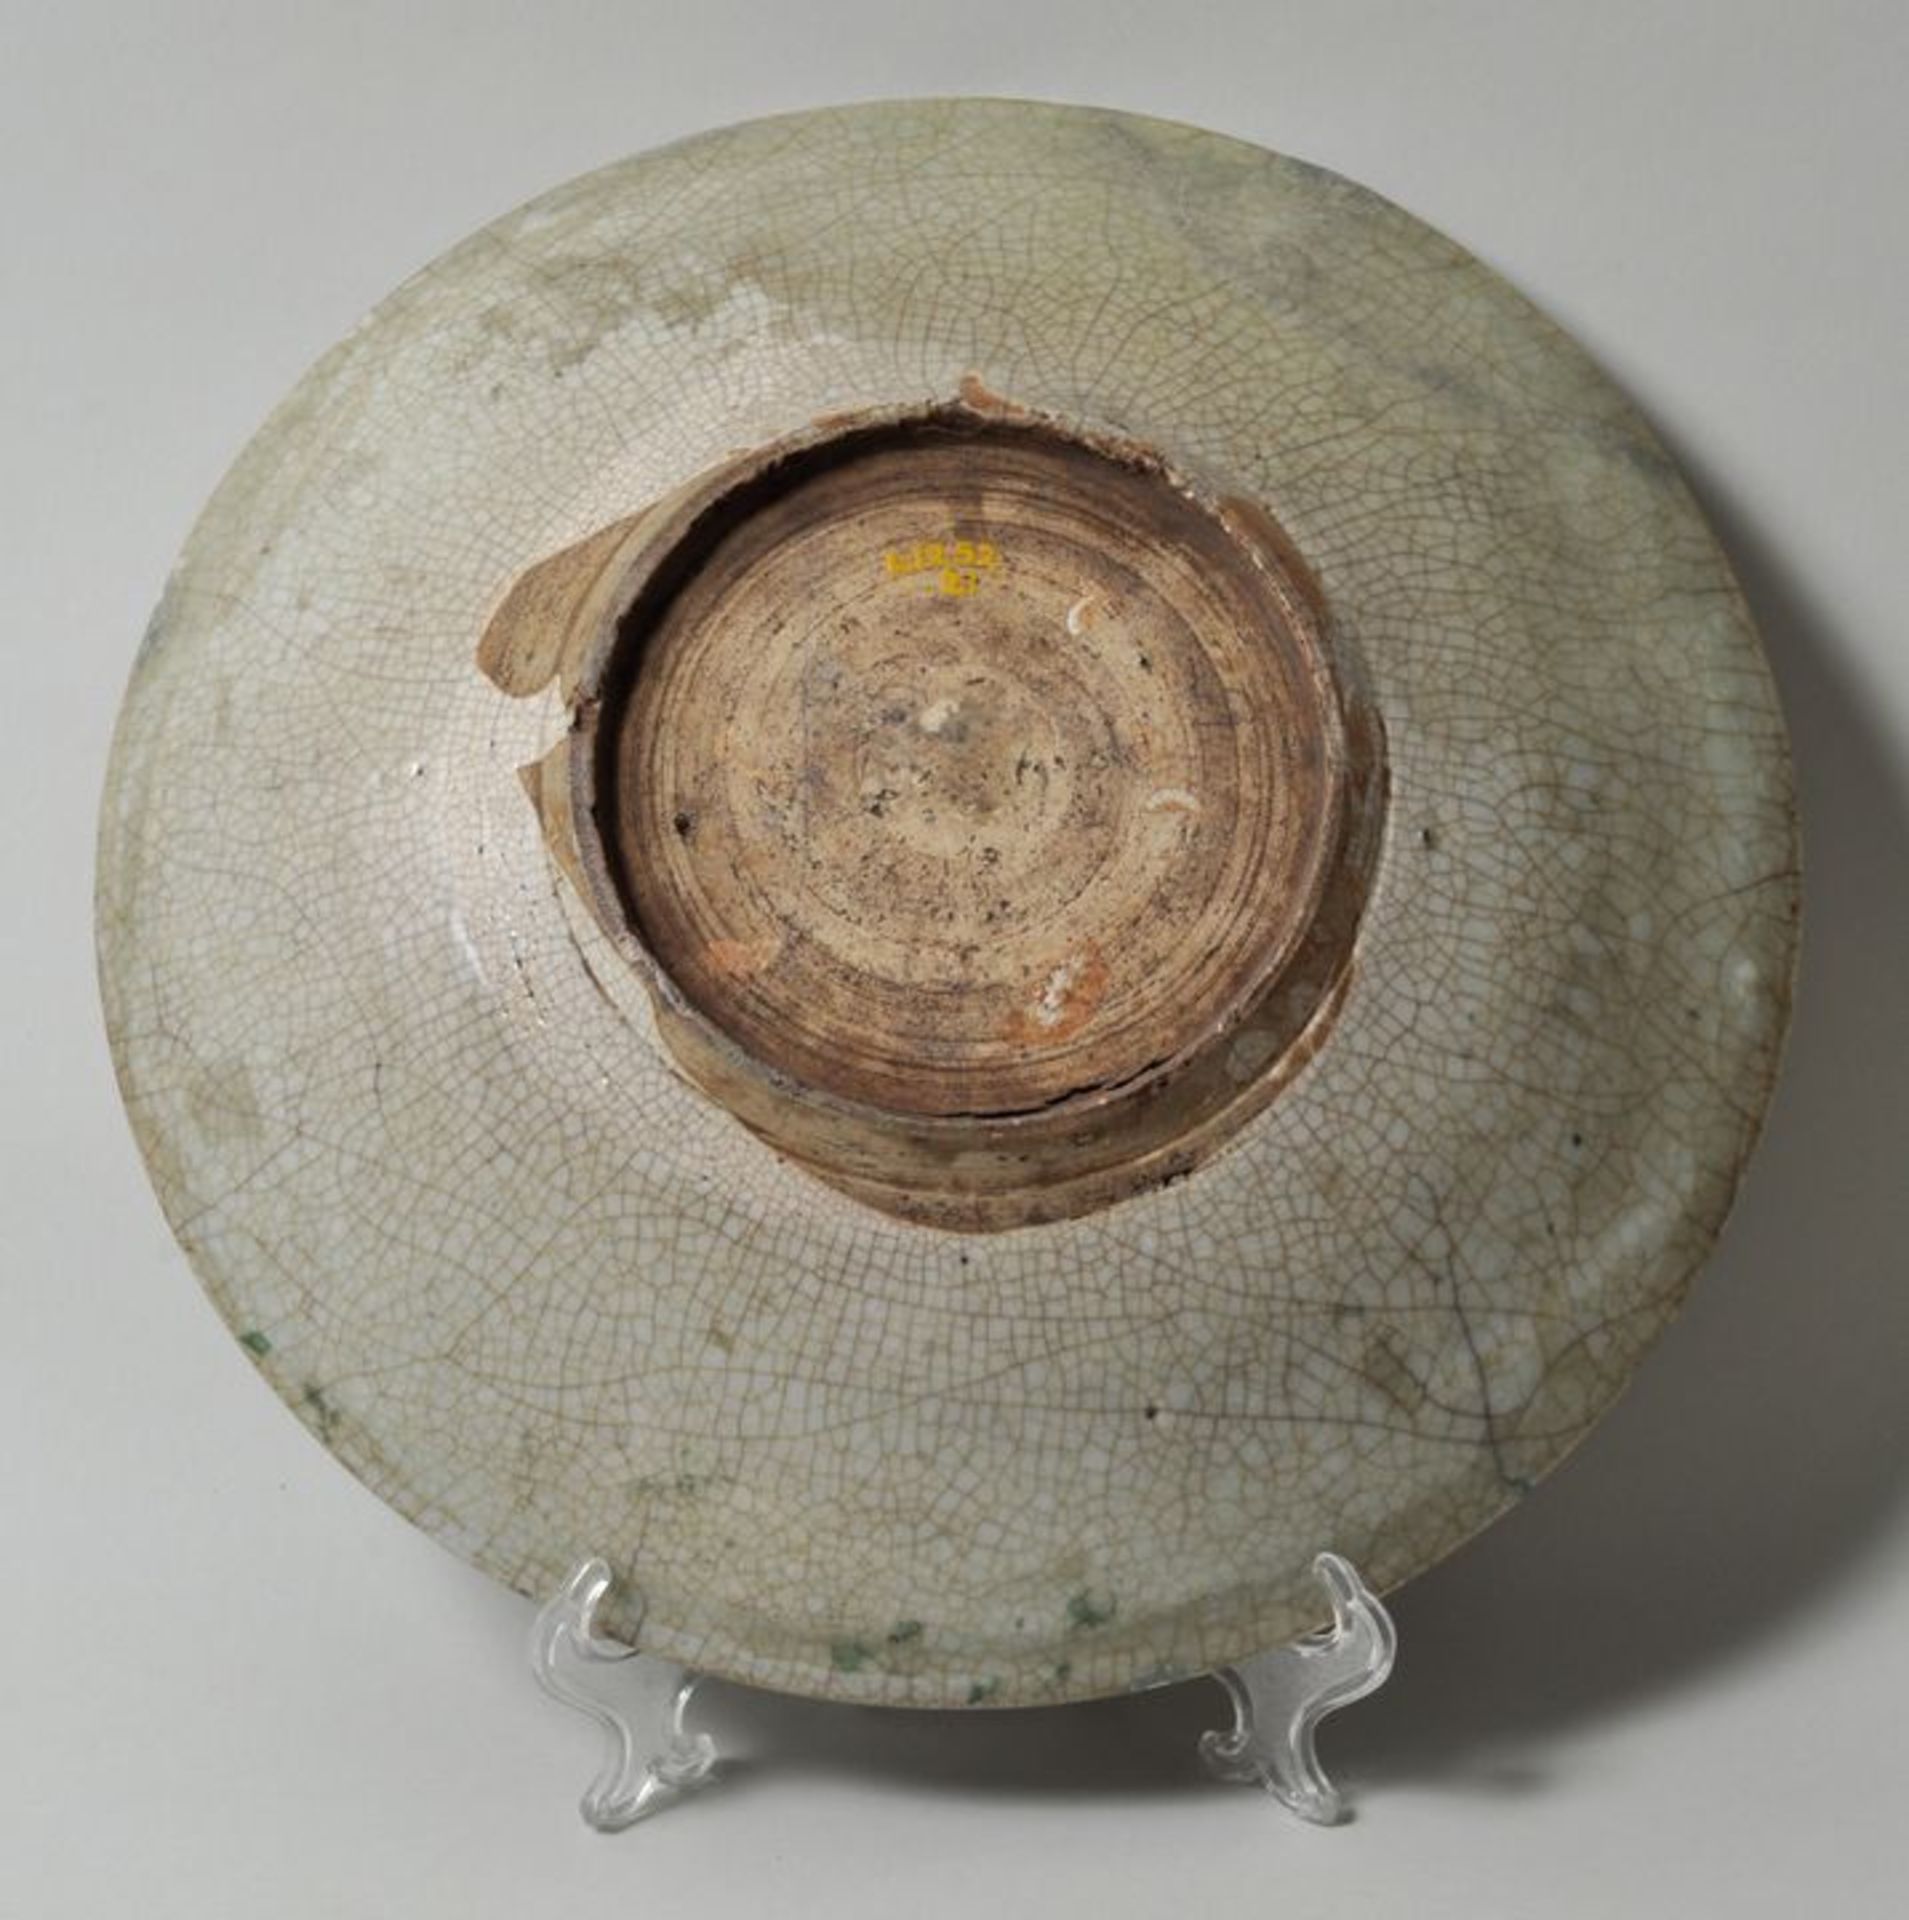 Runde Platte, China, Zhangzhou ware, sog. Swatow-Keramik, sp. Ming-DynastieSteinzeug, - Bild 2 aus 2